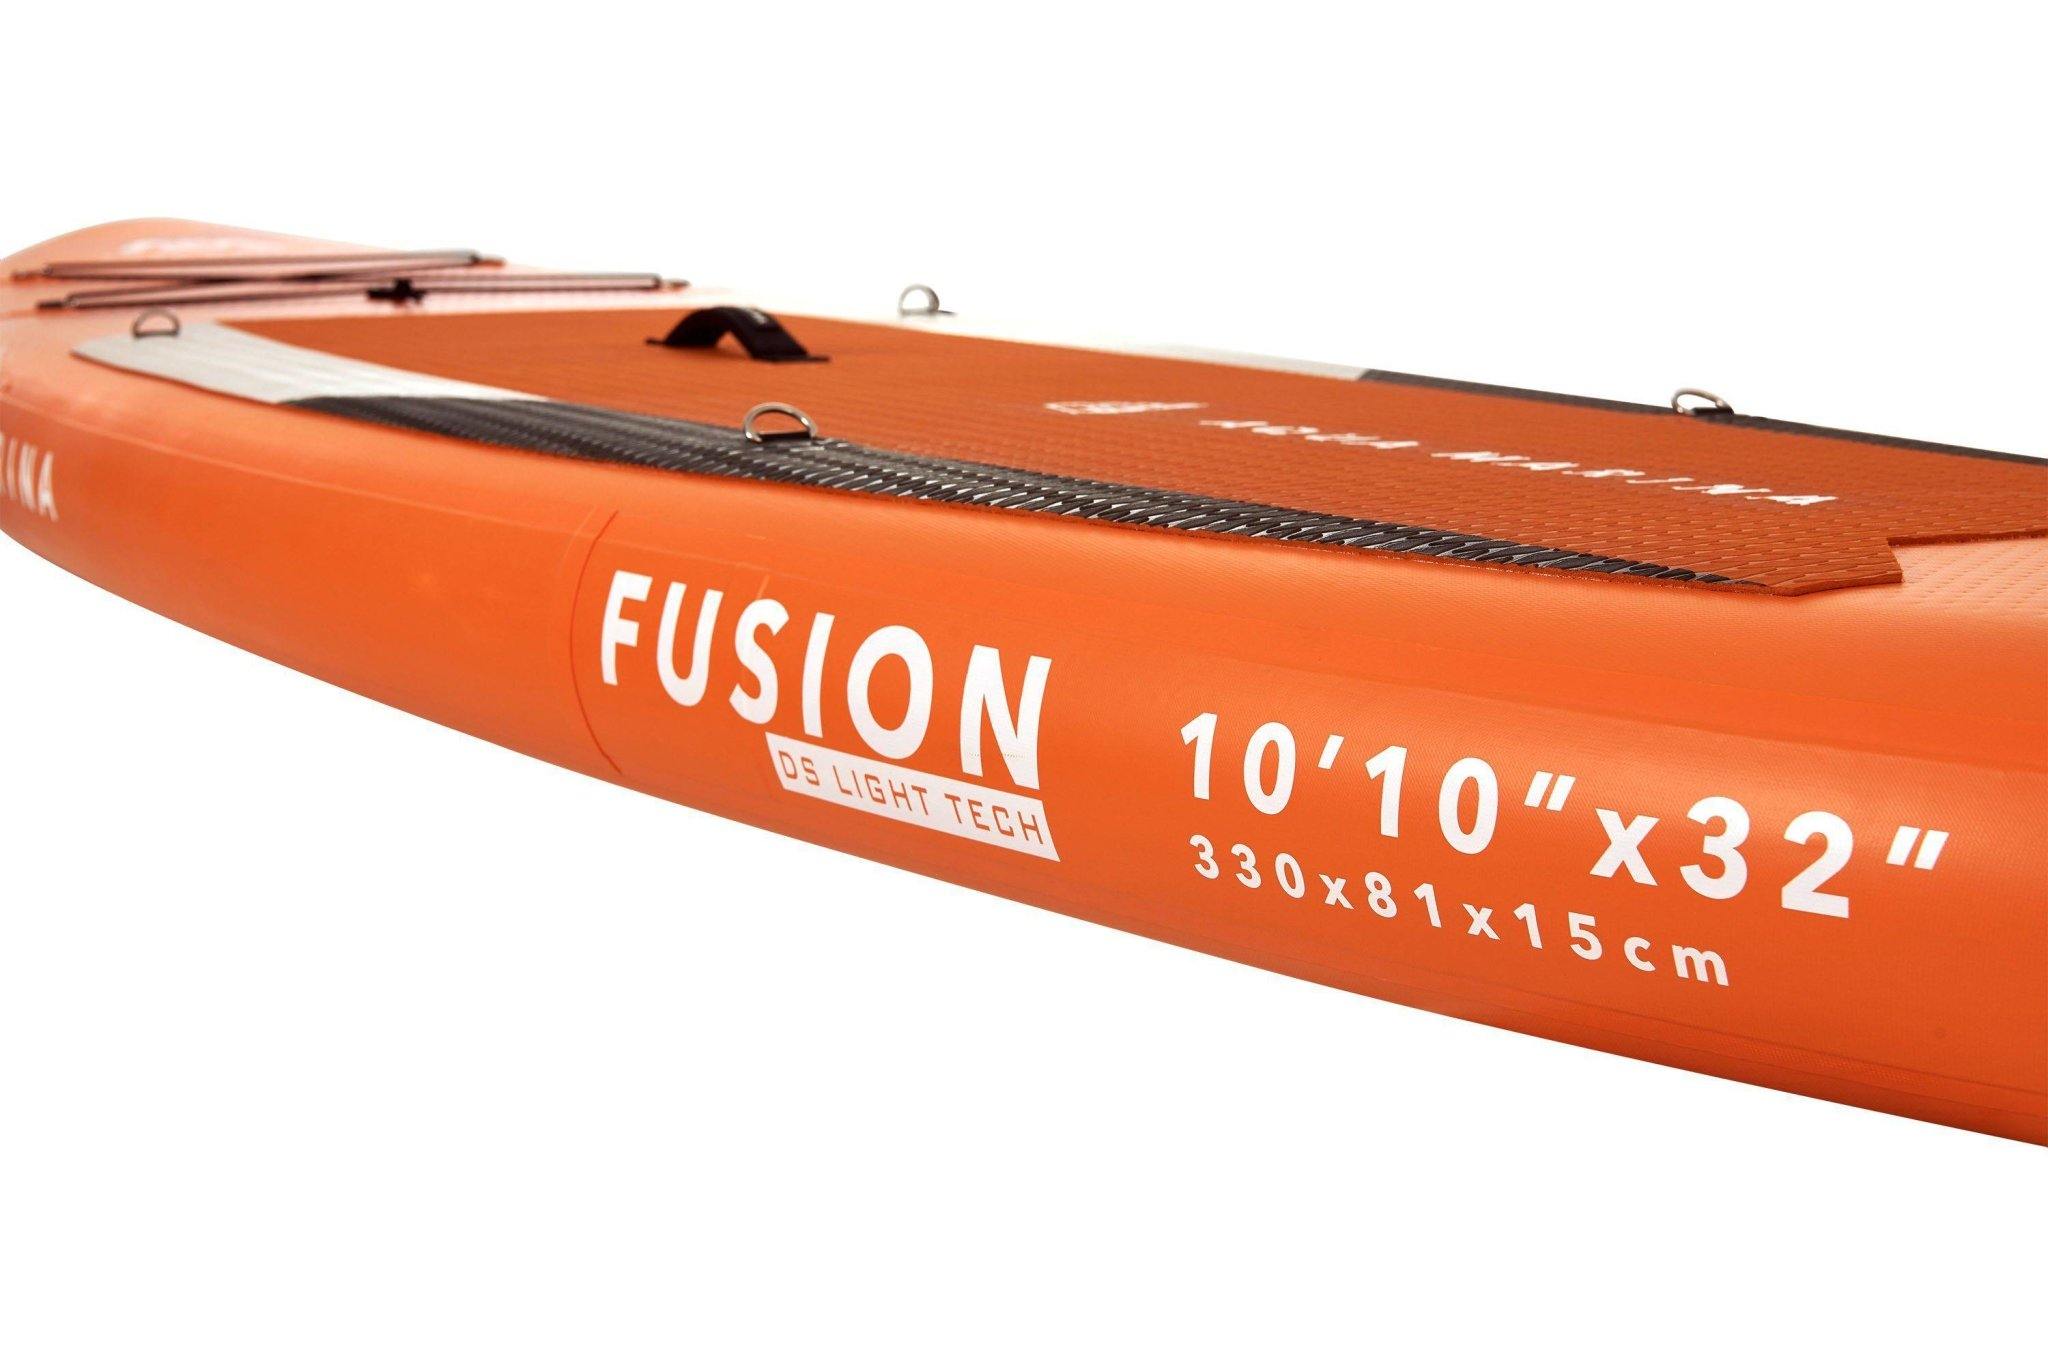 Fusion All-Around iSUP Paddle Board - Dti Direct USA